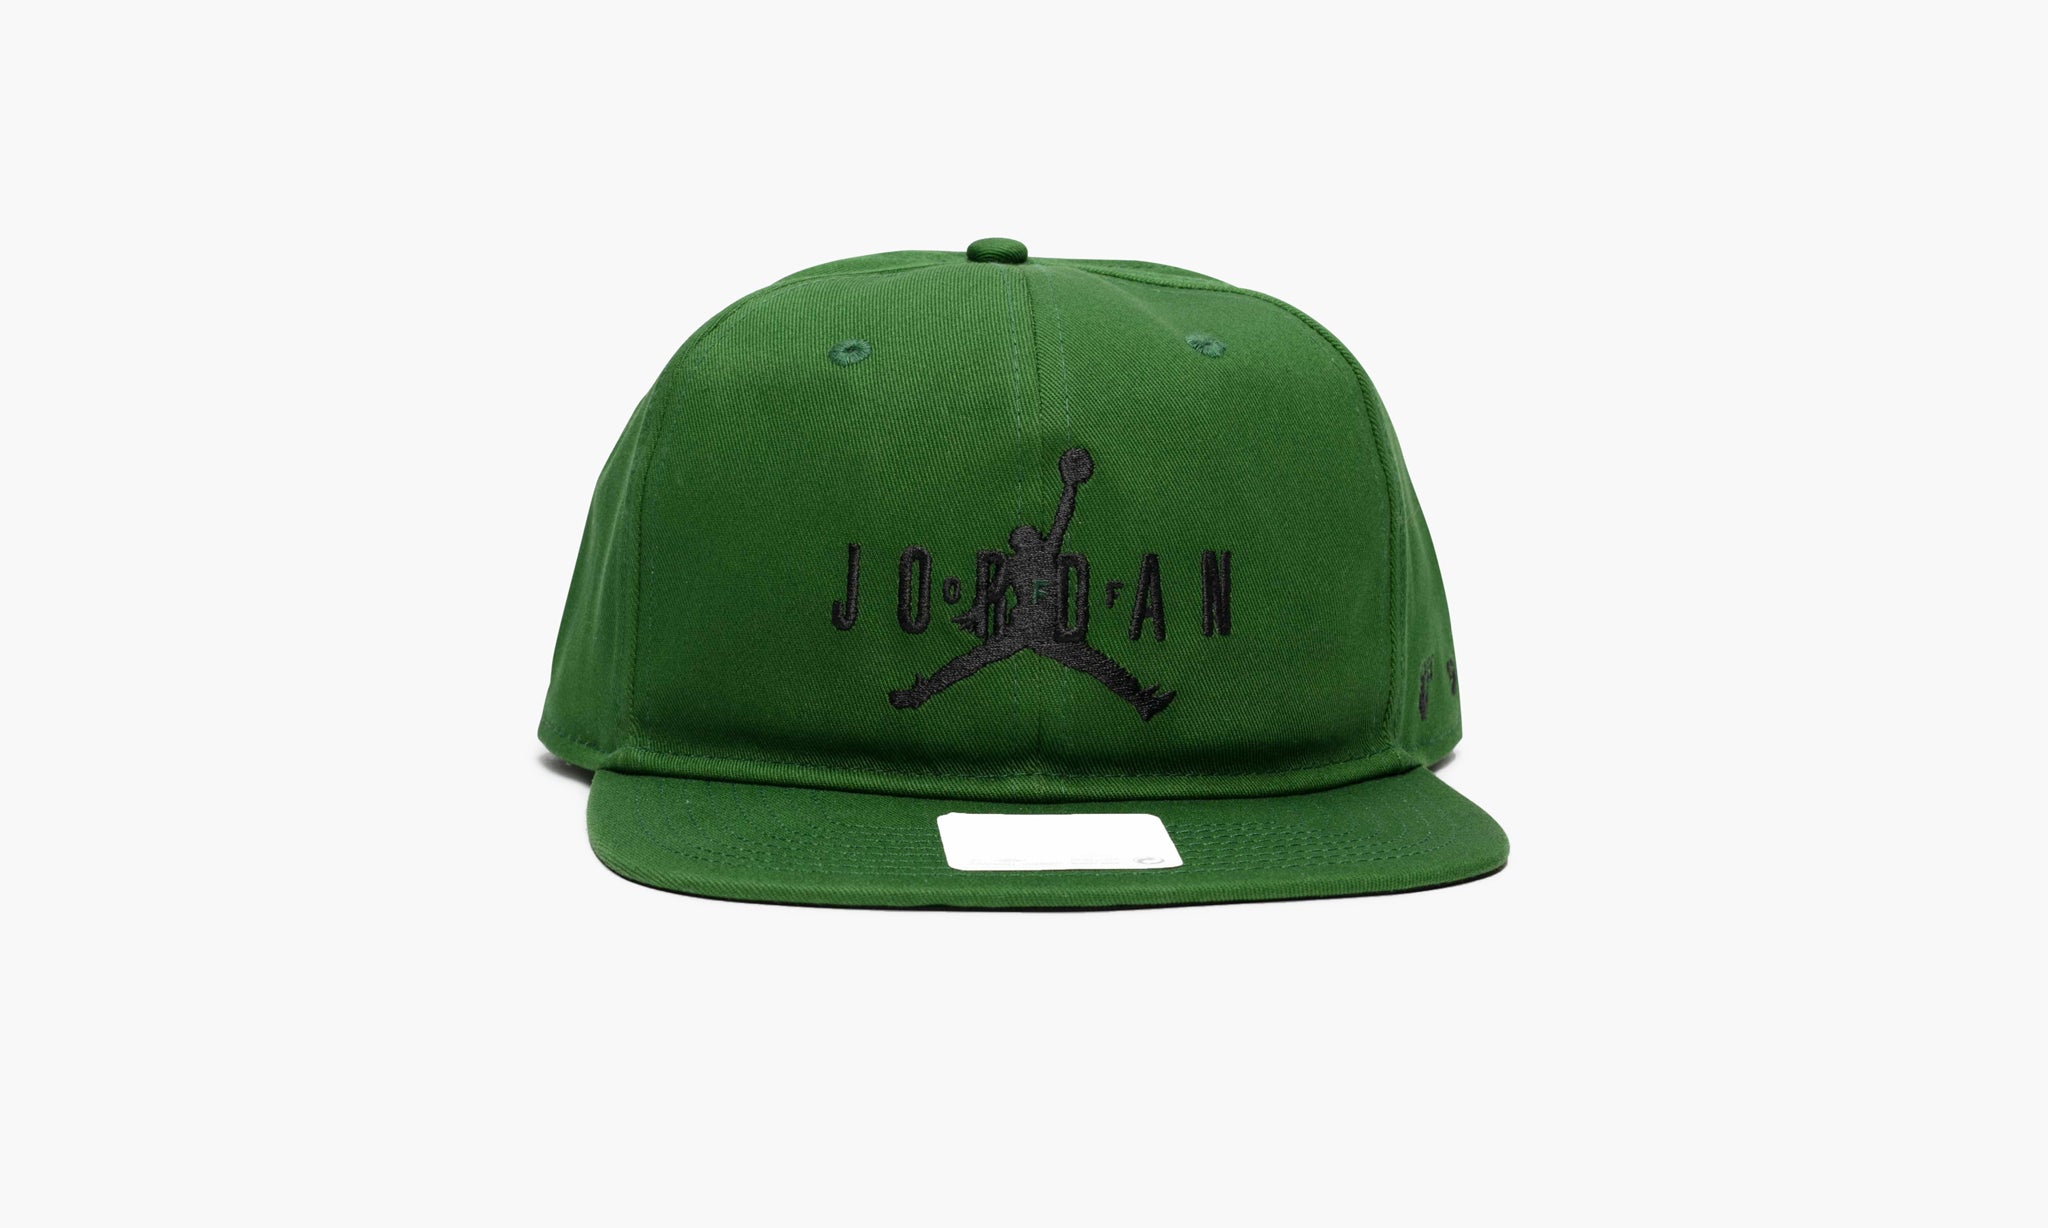 Air Jordan x Off-White Green Cap